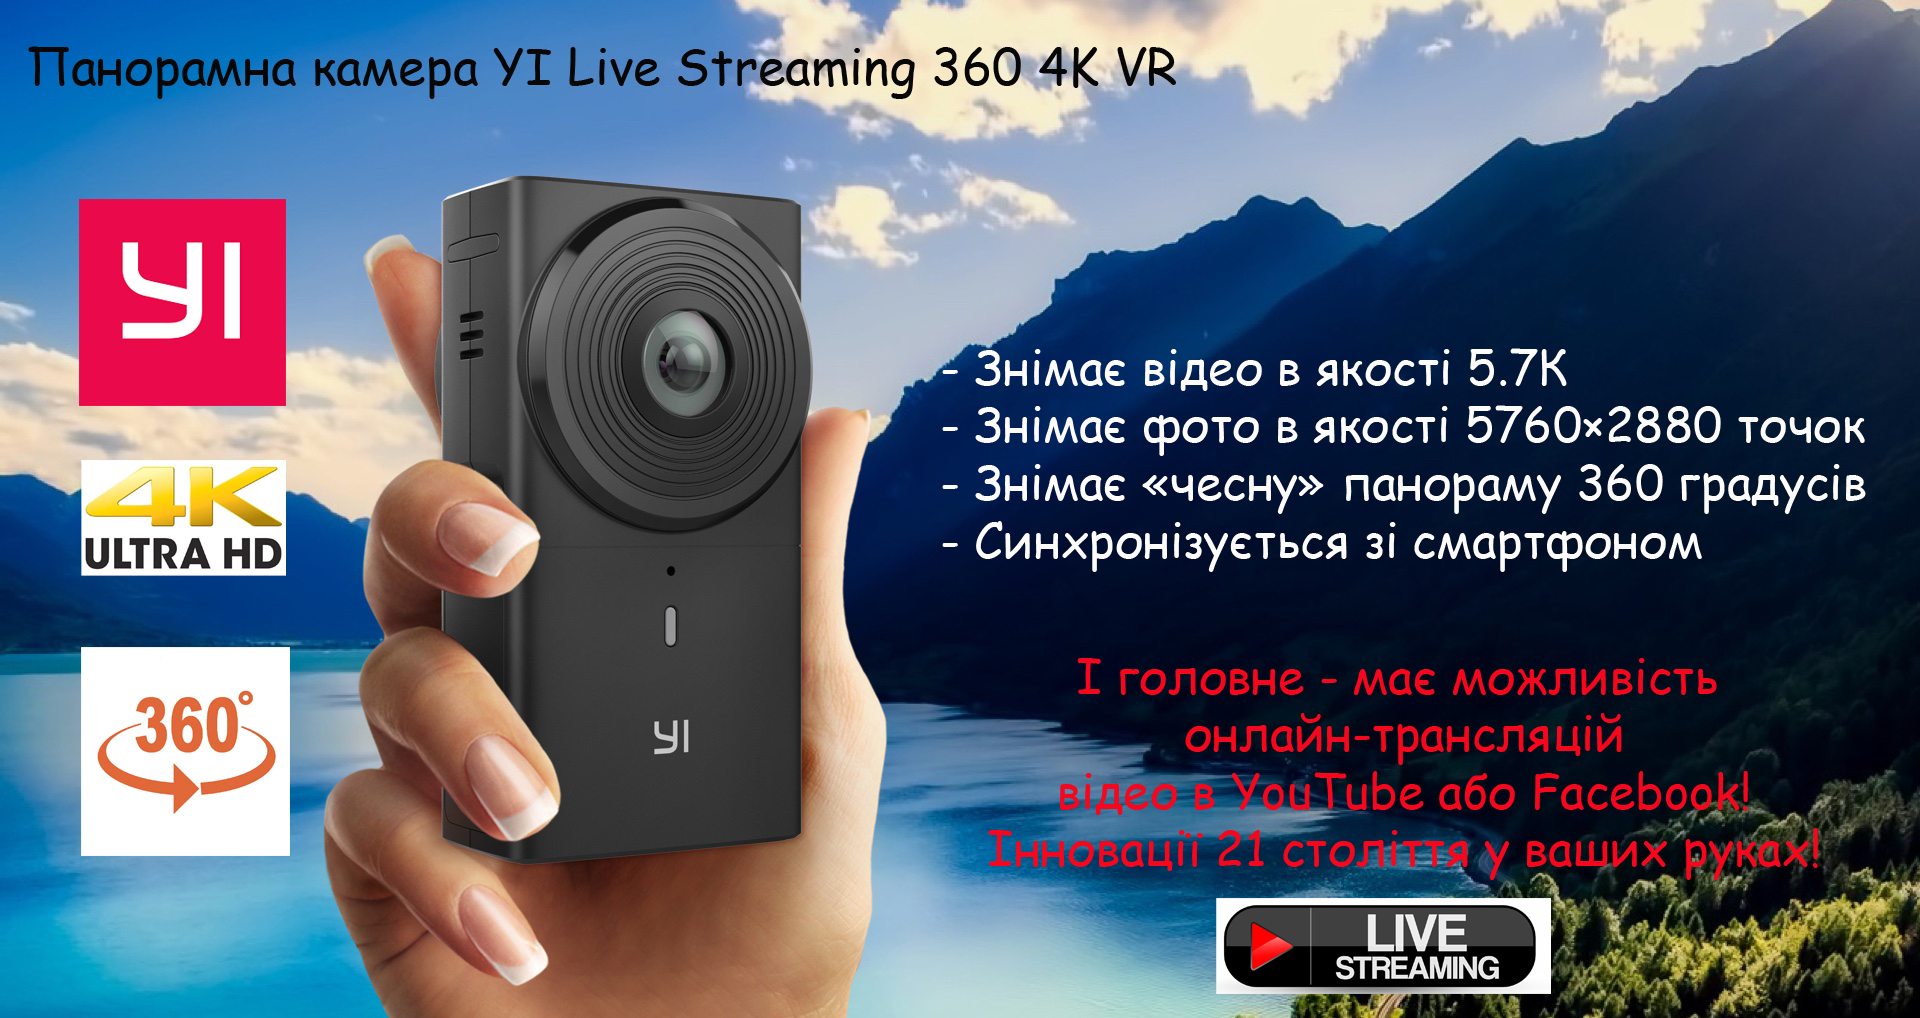 YI Live Streaming 360 4K VR конкурс